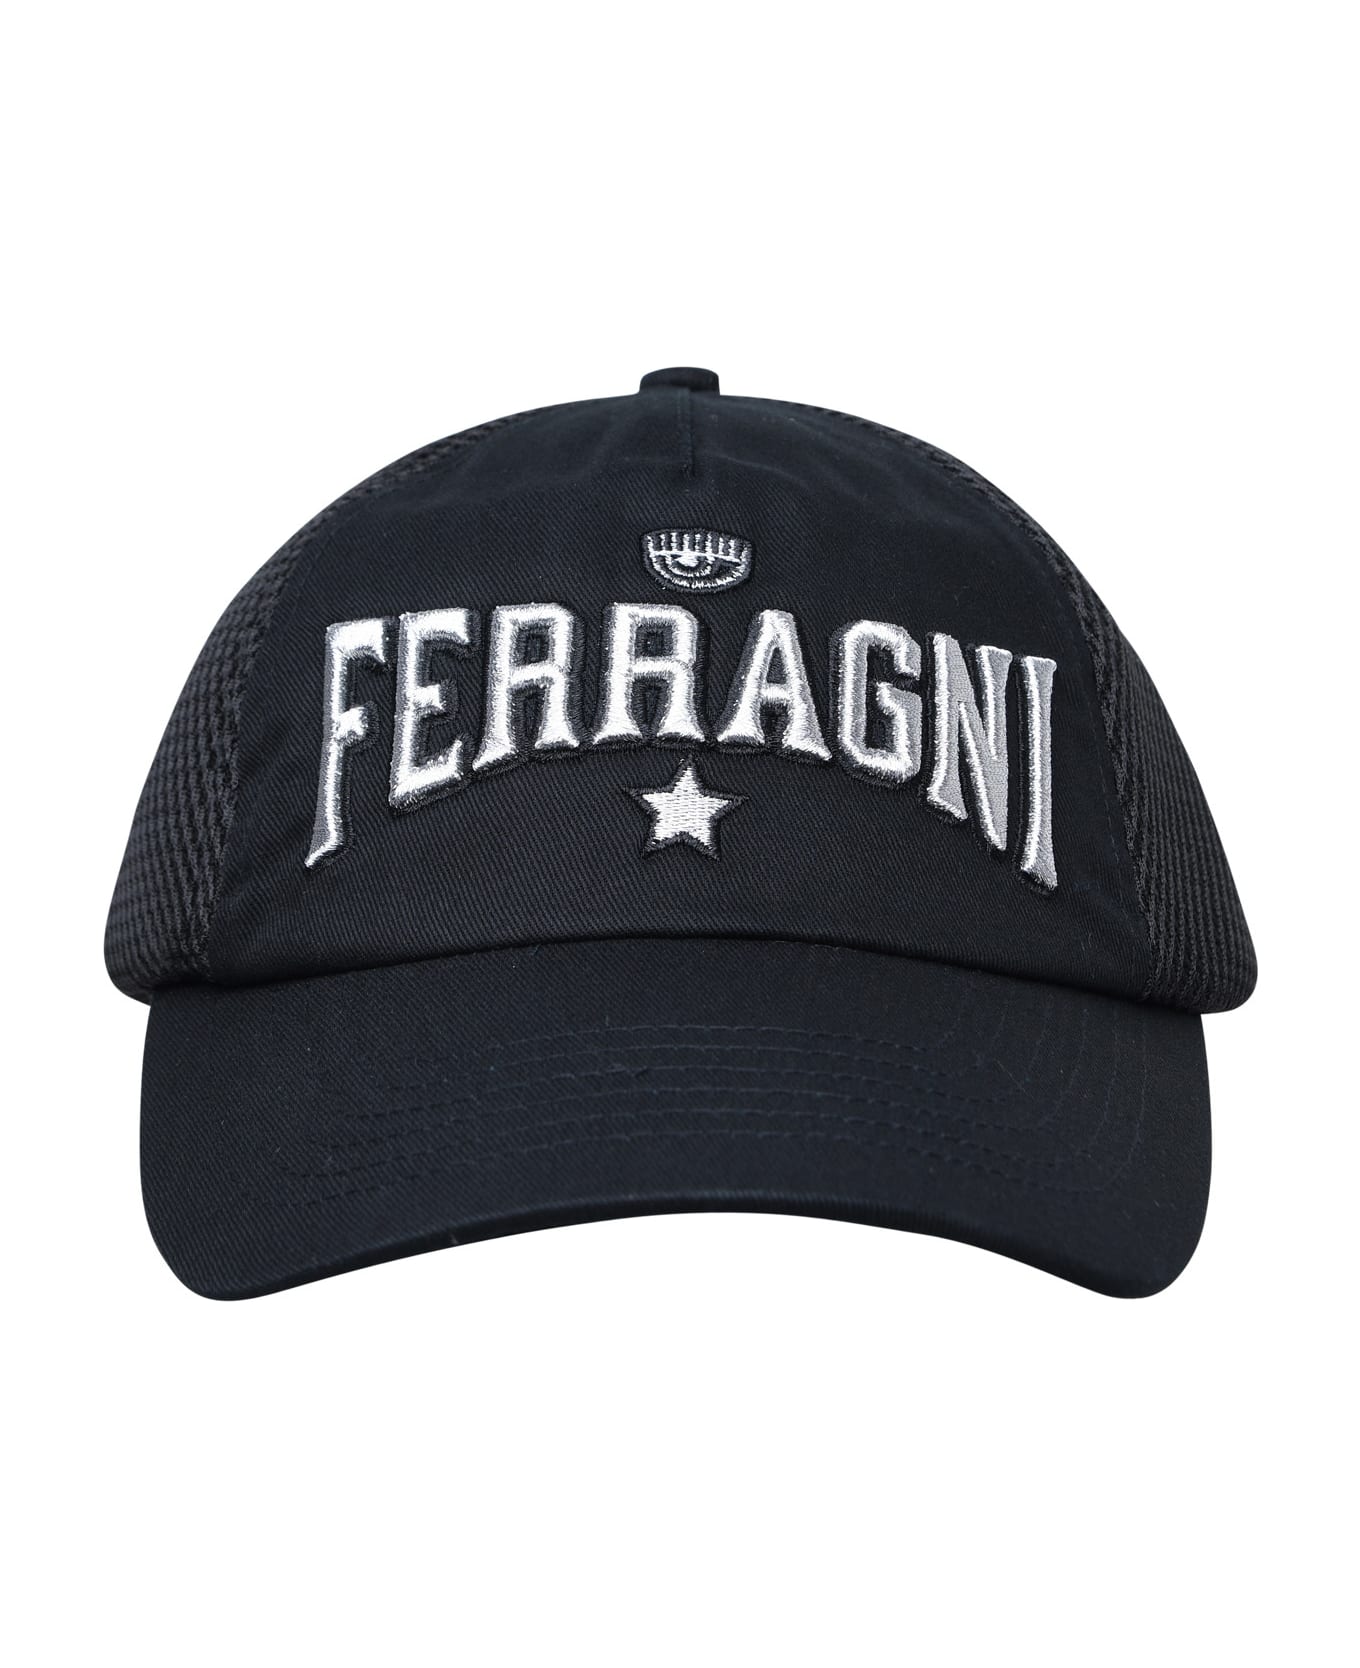 Chiara Ferragni Hat In Black Cotton Blend - Black 帽子